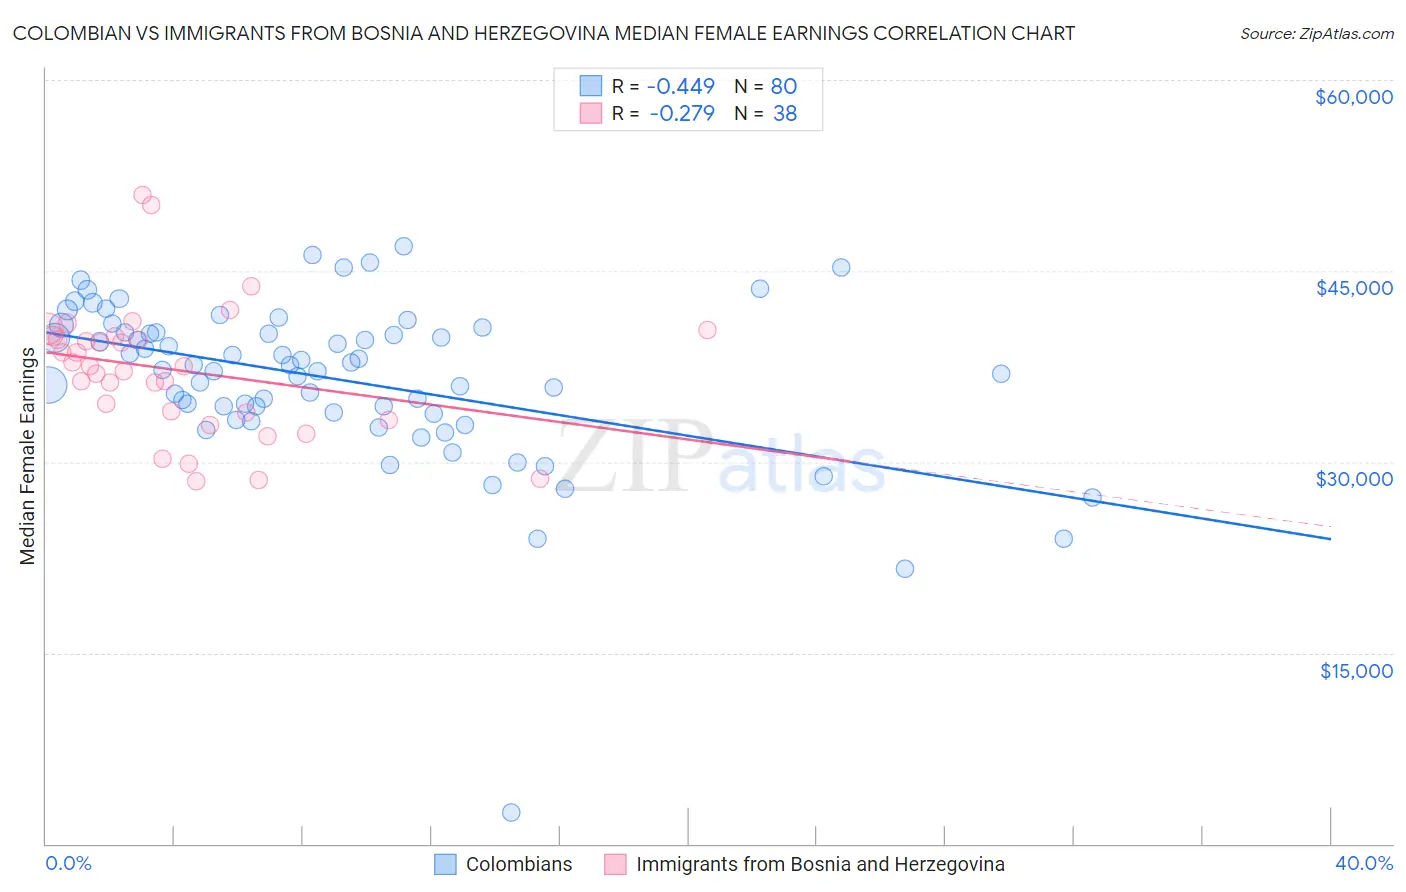 Colombian vs Immigrants from Bosnia and Herzegovina Median Female Earnings